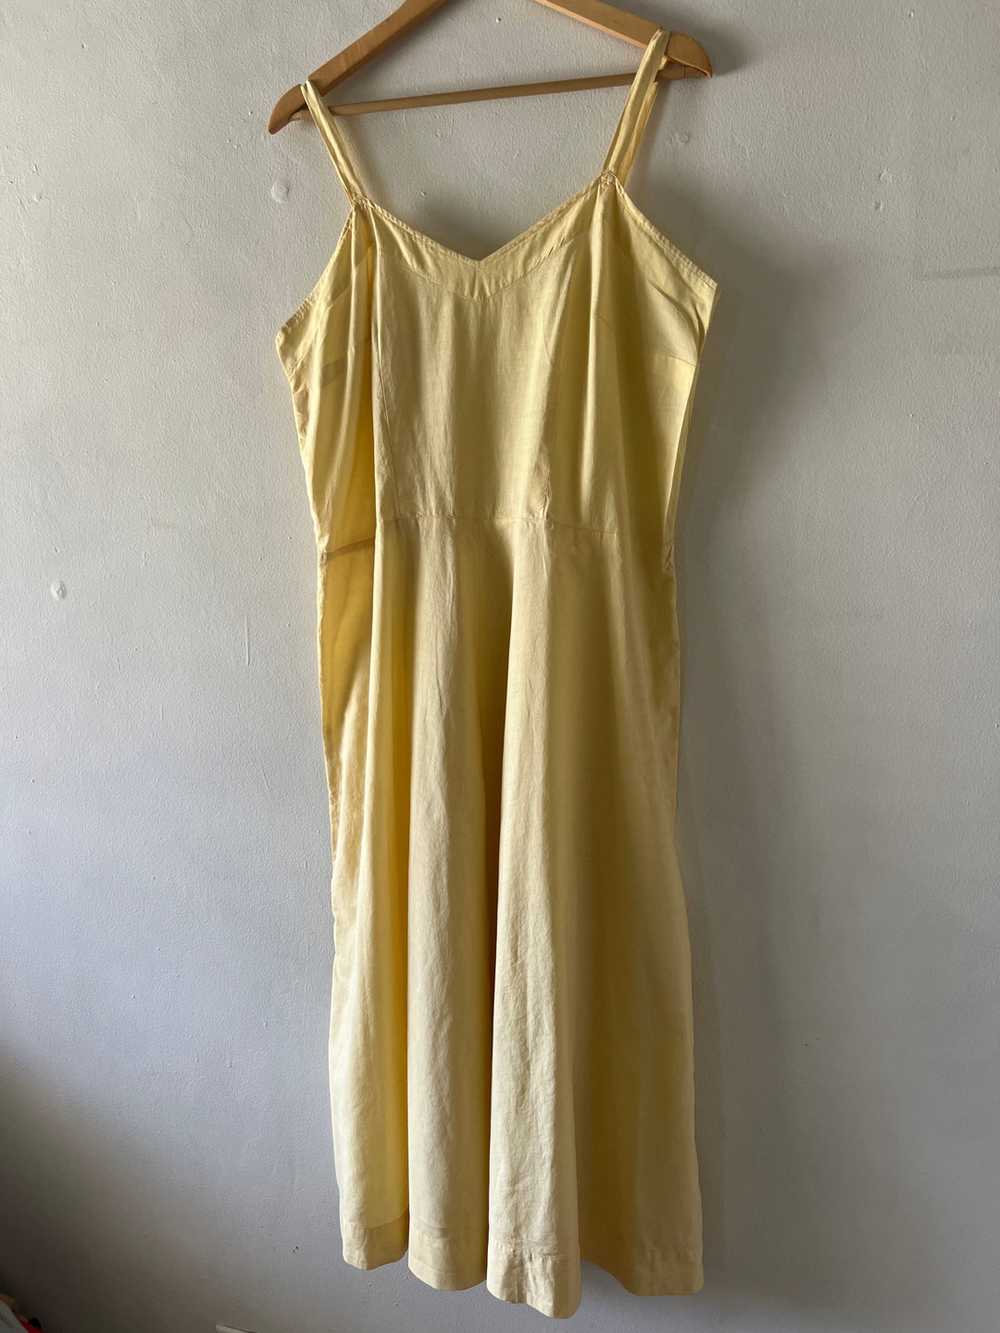 Vintage Cotton Yellow Dress (L) - image 2